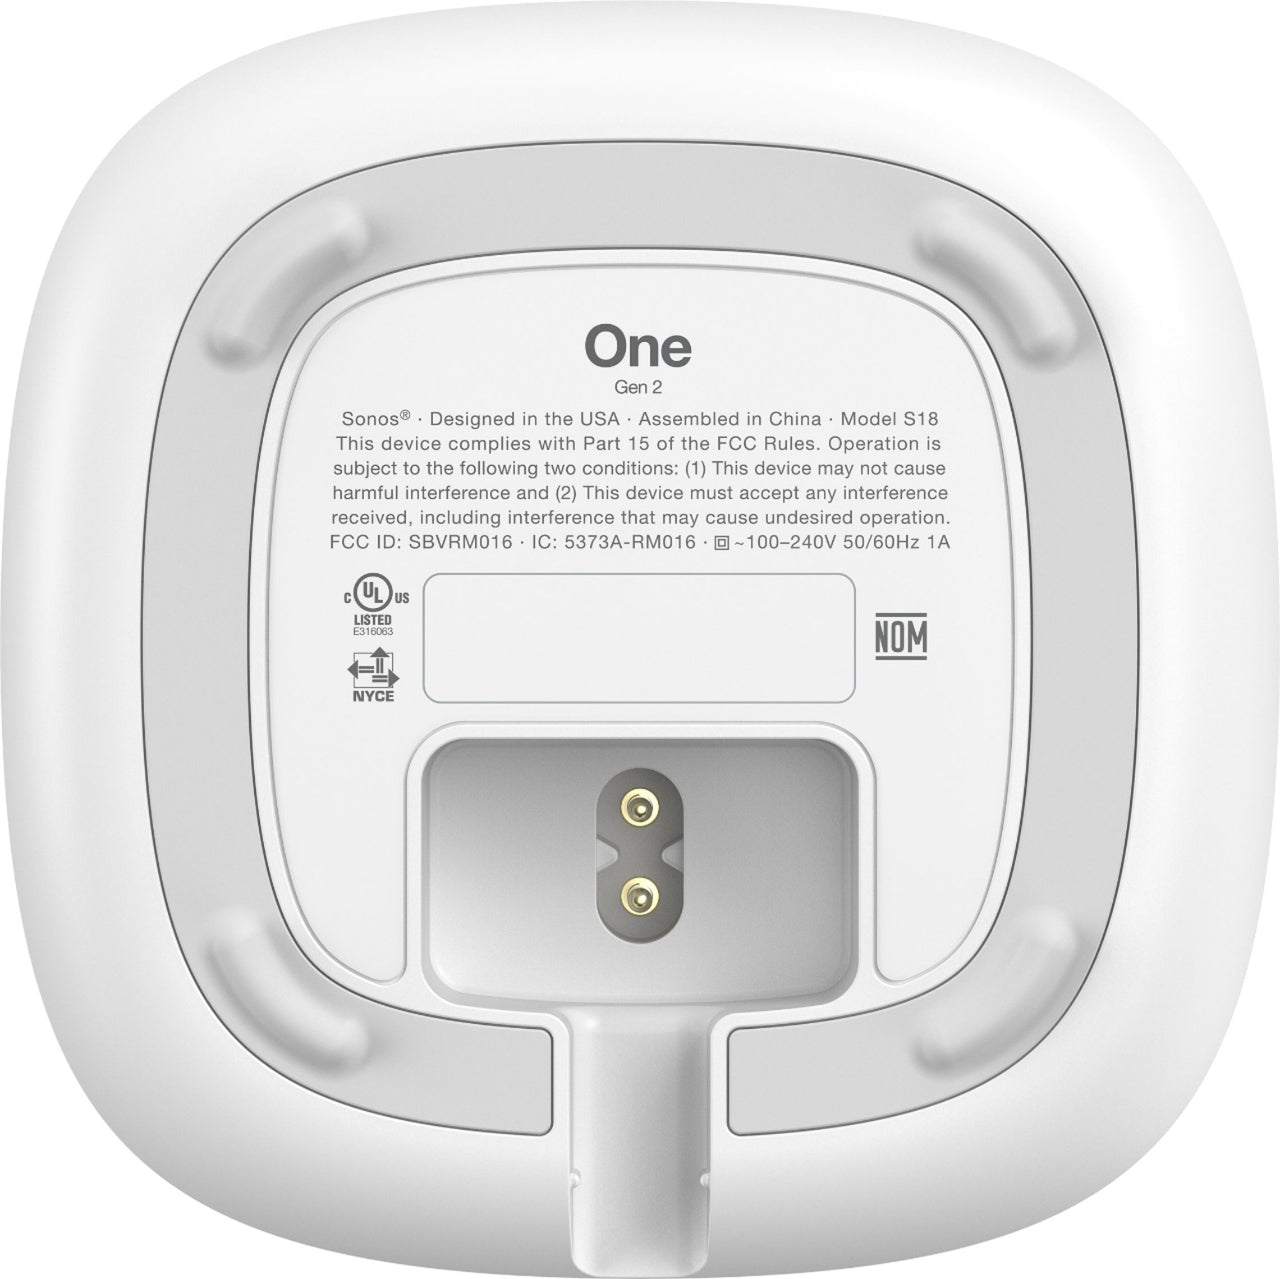 Sonos - One (Gen 2) Smart Speaker with Voice Control built-in - White